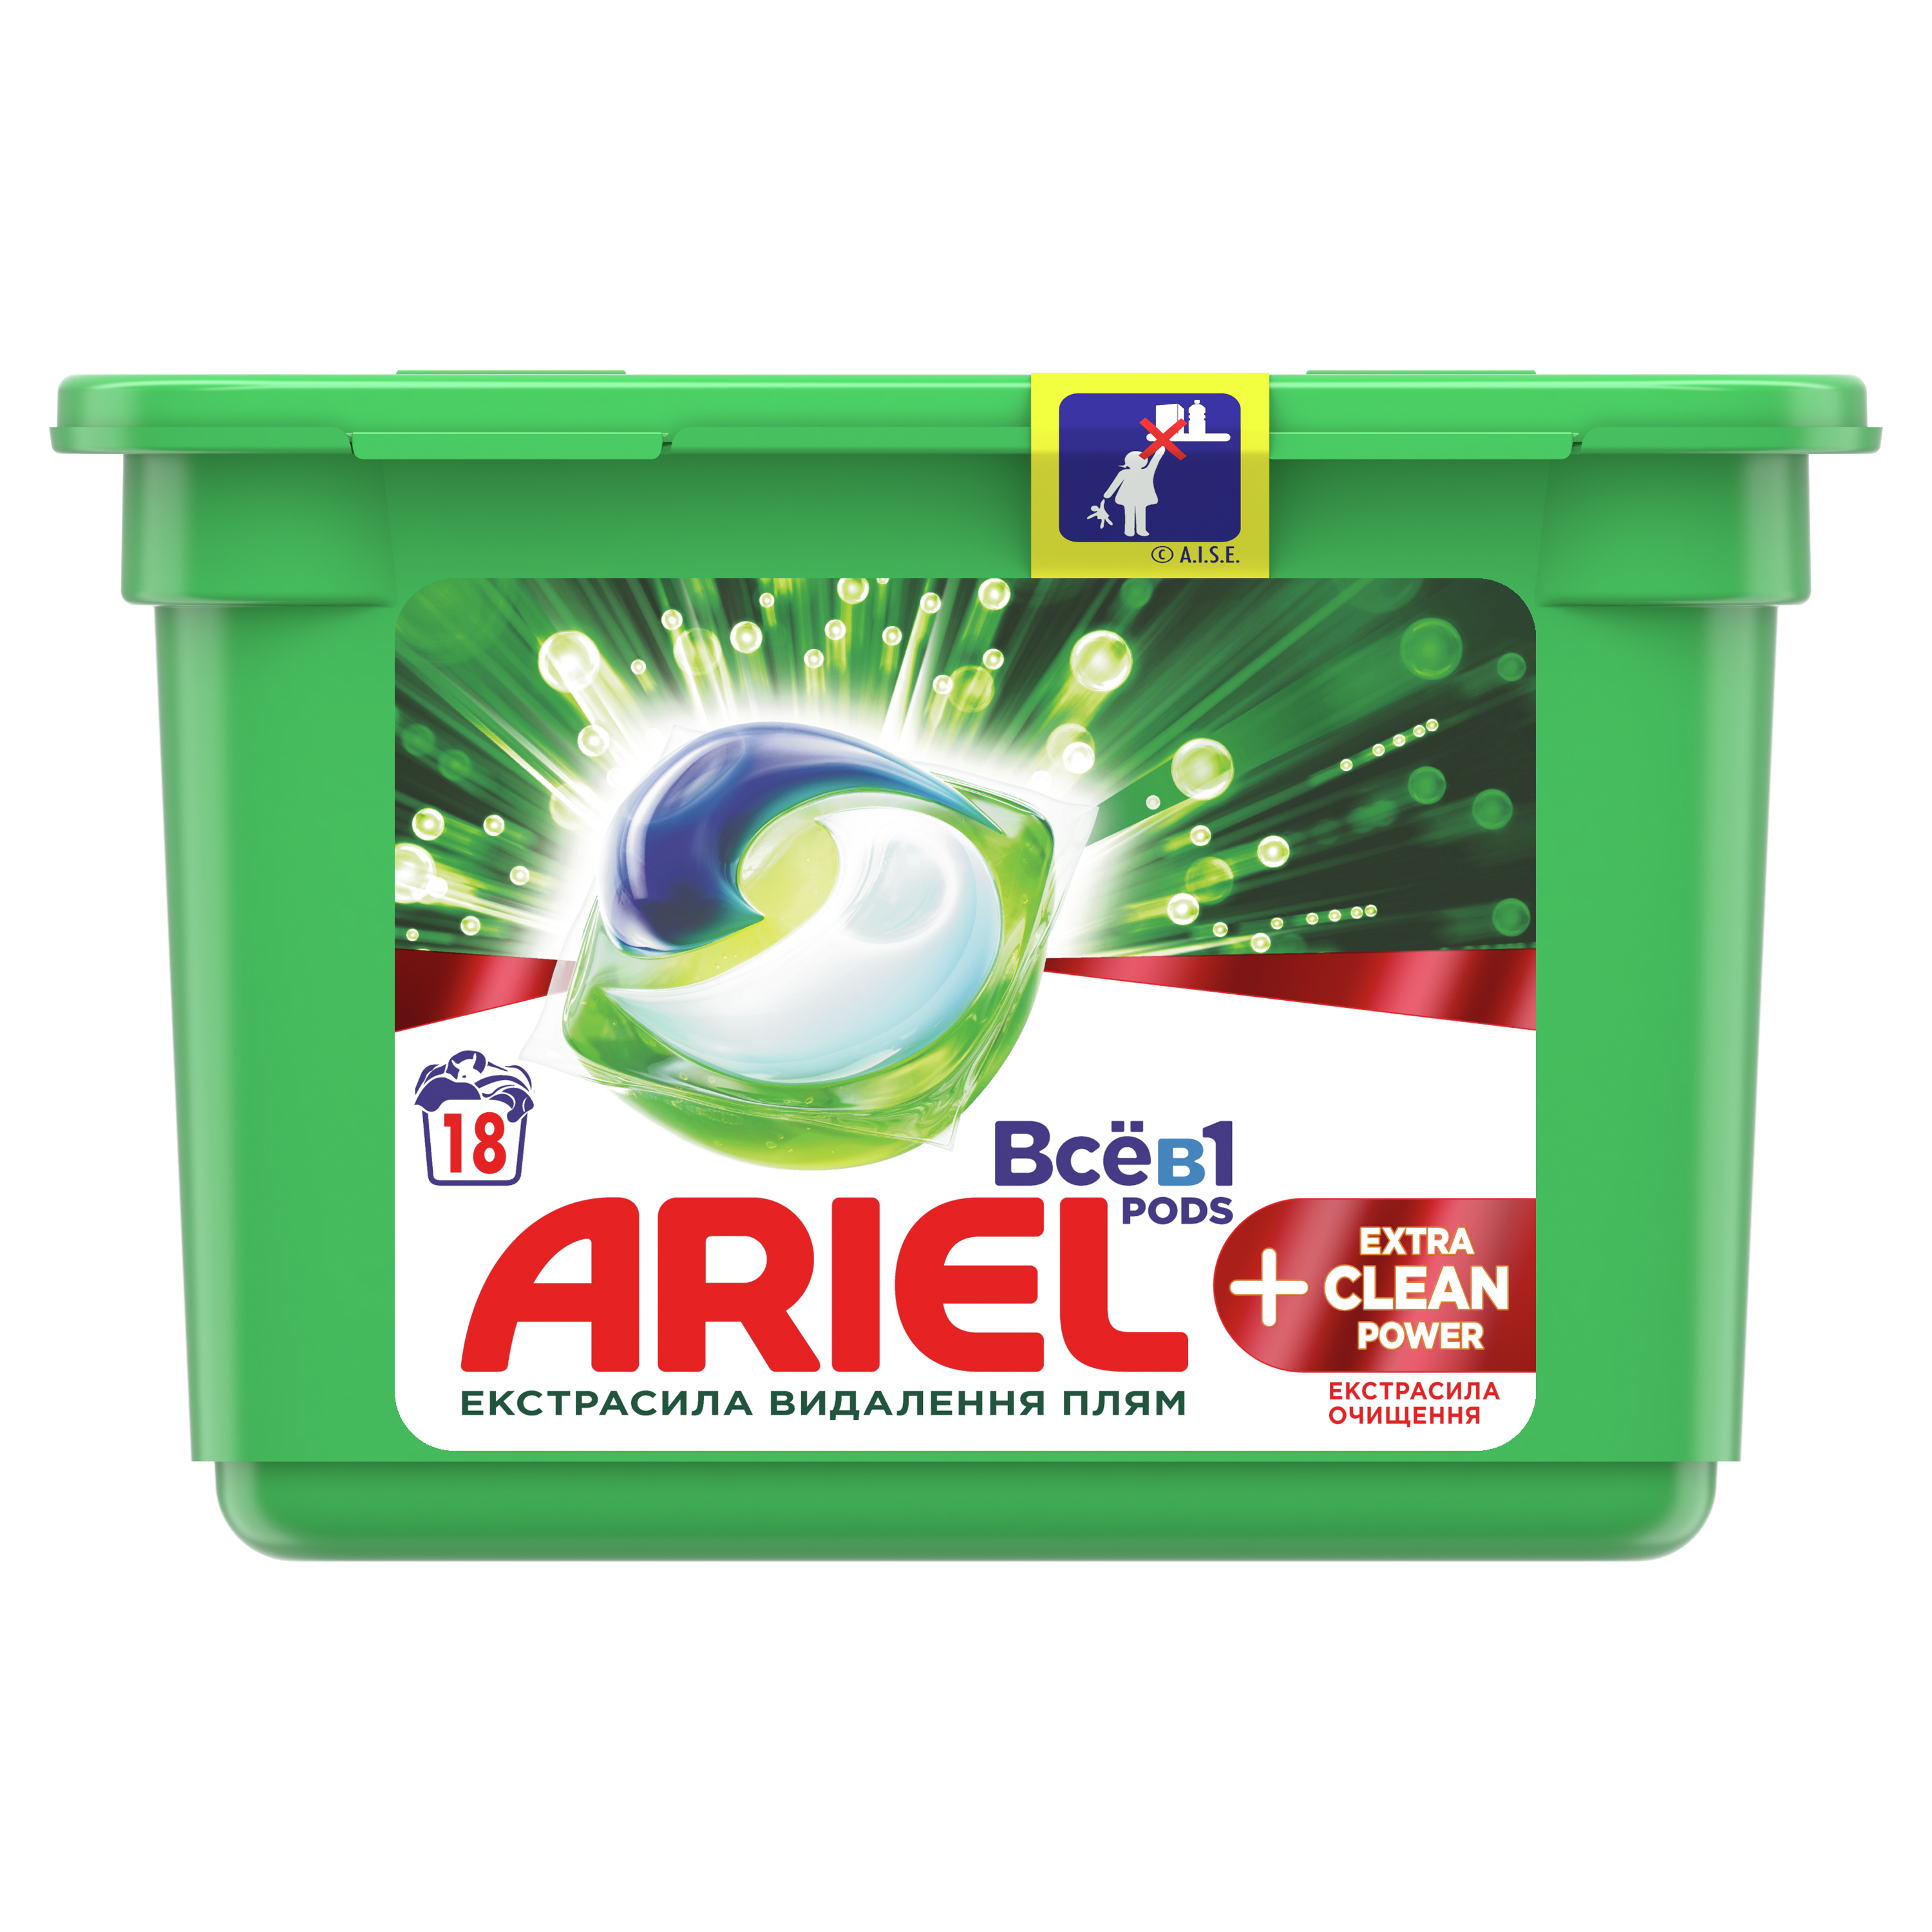 Капсули для прання Ariel Pods Все-в-1 + Екстра OXI Effect, 18 шт (81763739) - фото 1